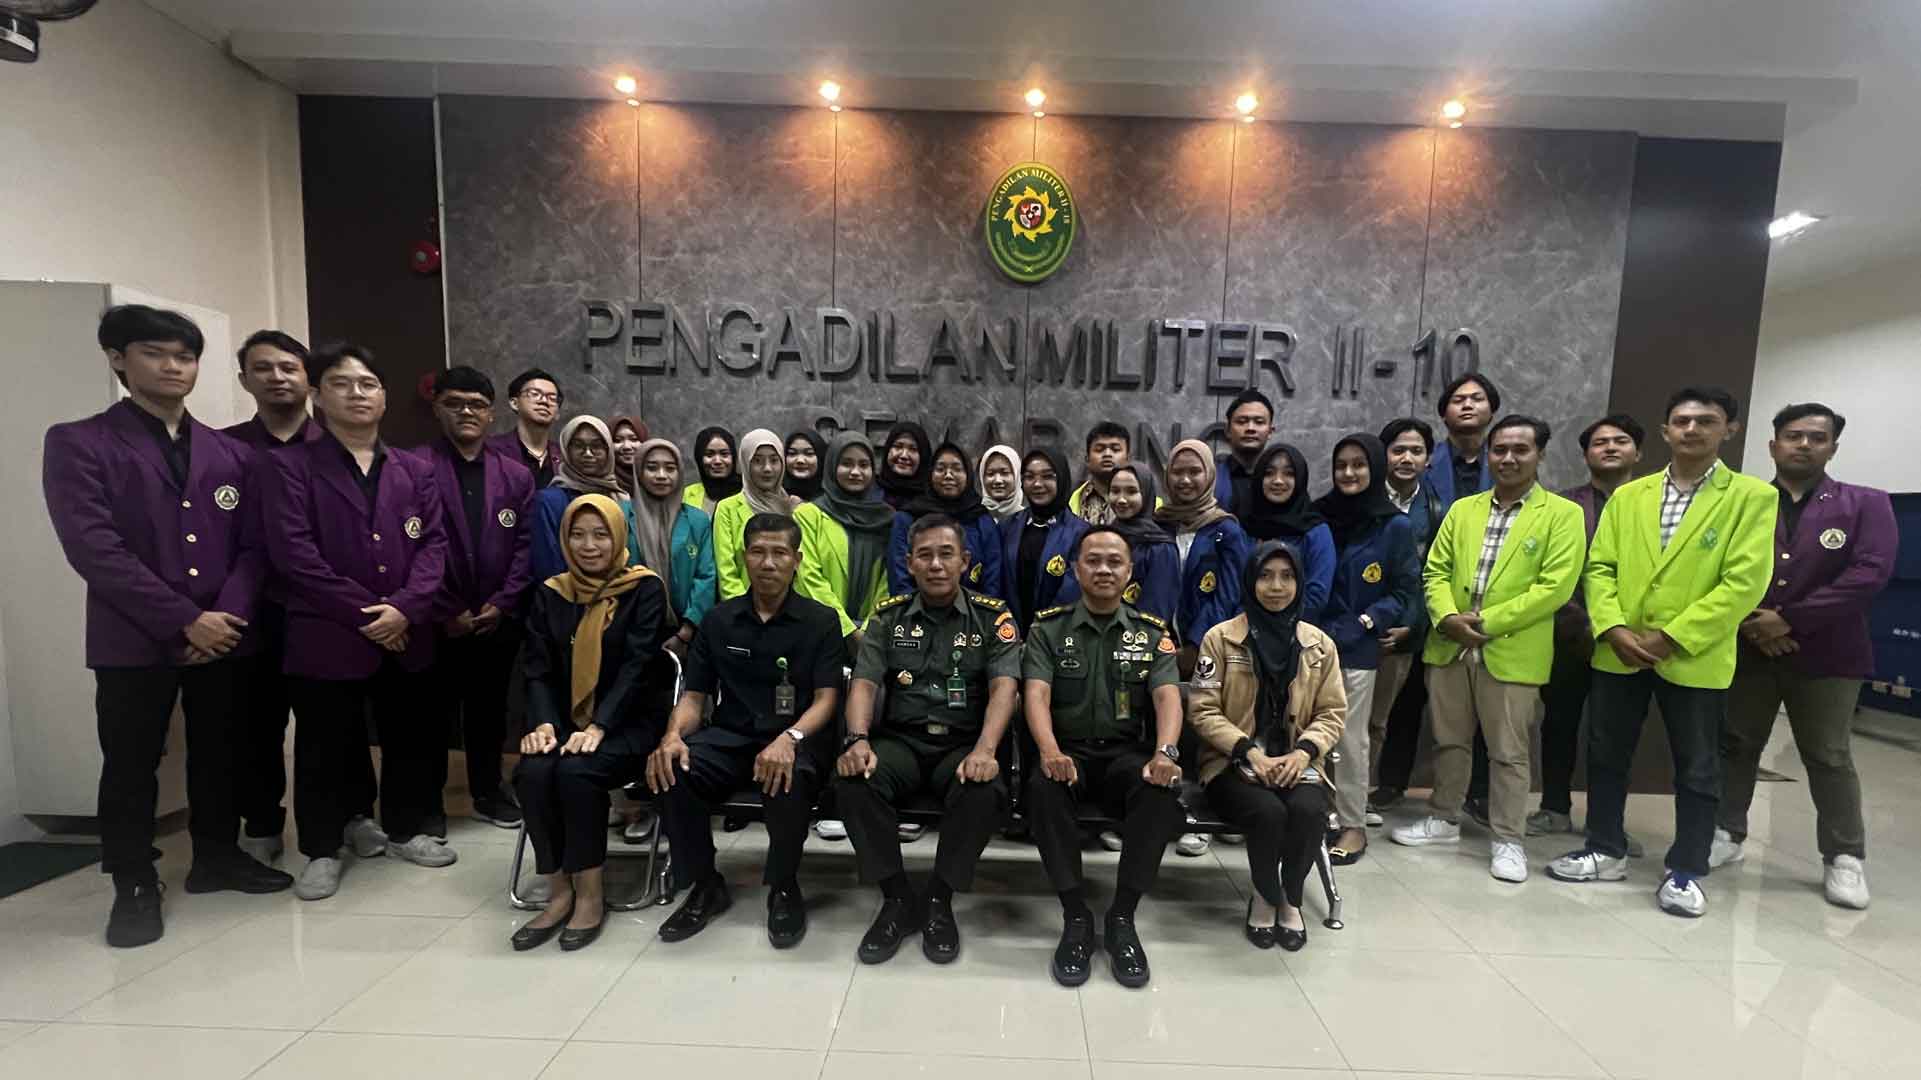 Penghubung KY Jateng Kunjungi Pengadilan Militer II 10 Semarang